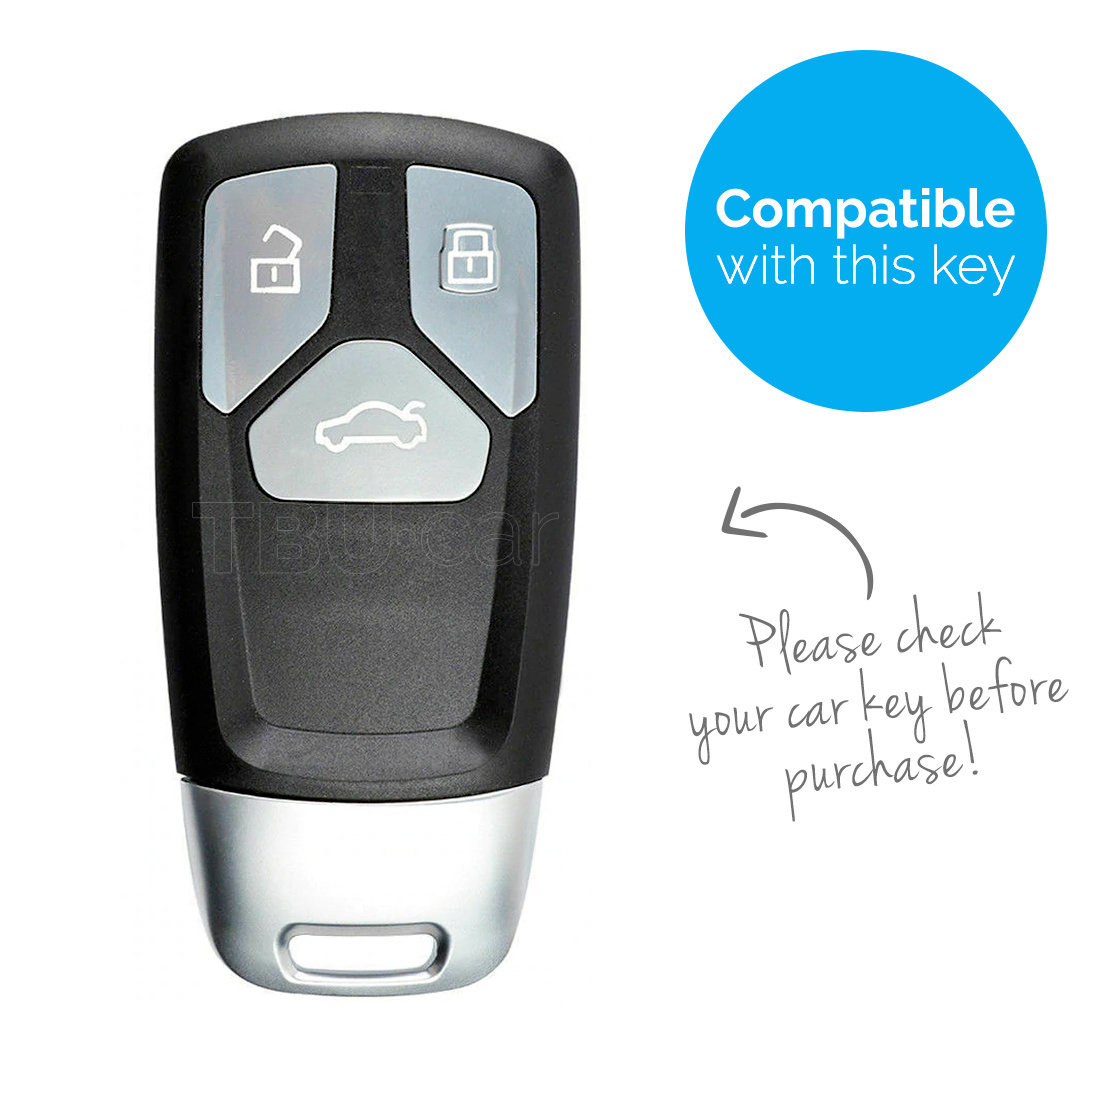 TBU car Autoschlüssel Hülle kompatibel mit Audi 3 Tasten (Keyless Entry) -  Schutzhülle aus TPU - Auto Schlüsselhülle Cover in Silber Chrom